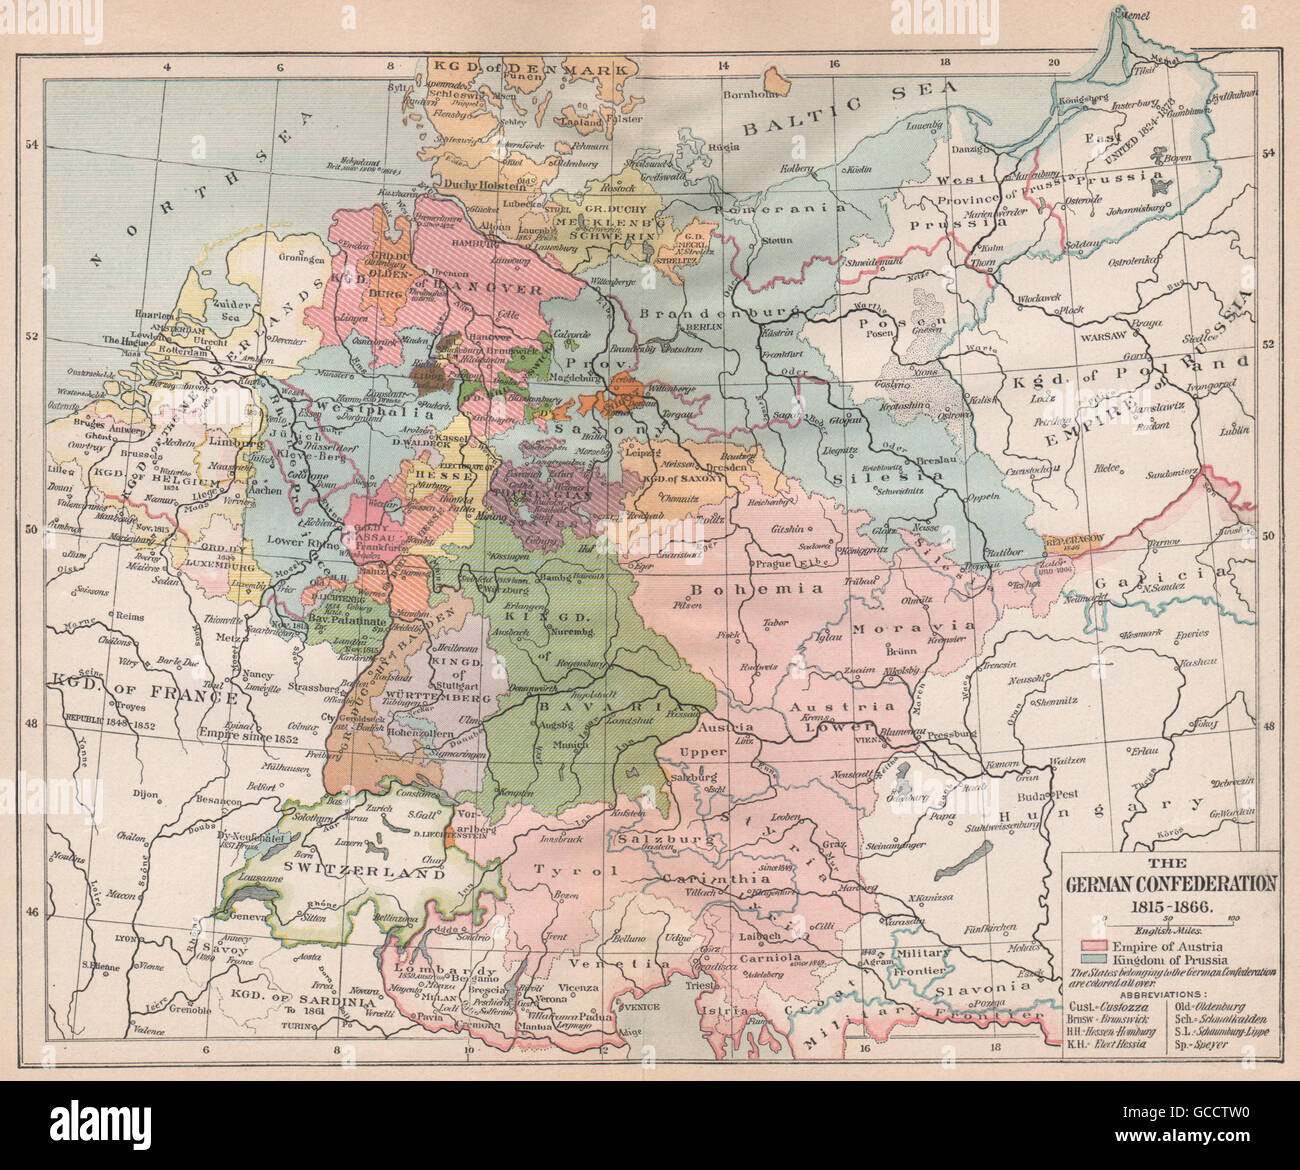 GERMAN CONFEDERATION 1815-1866. Empire of Austria. Kingdom of Prussia, 1917 map Stock Photo